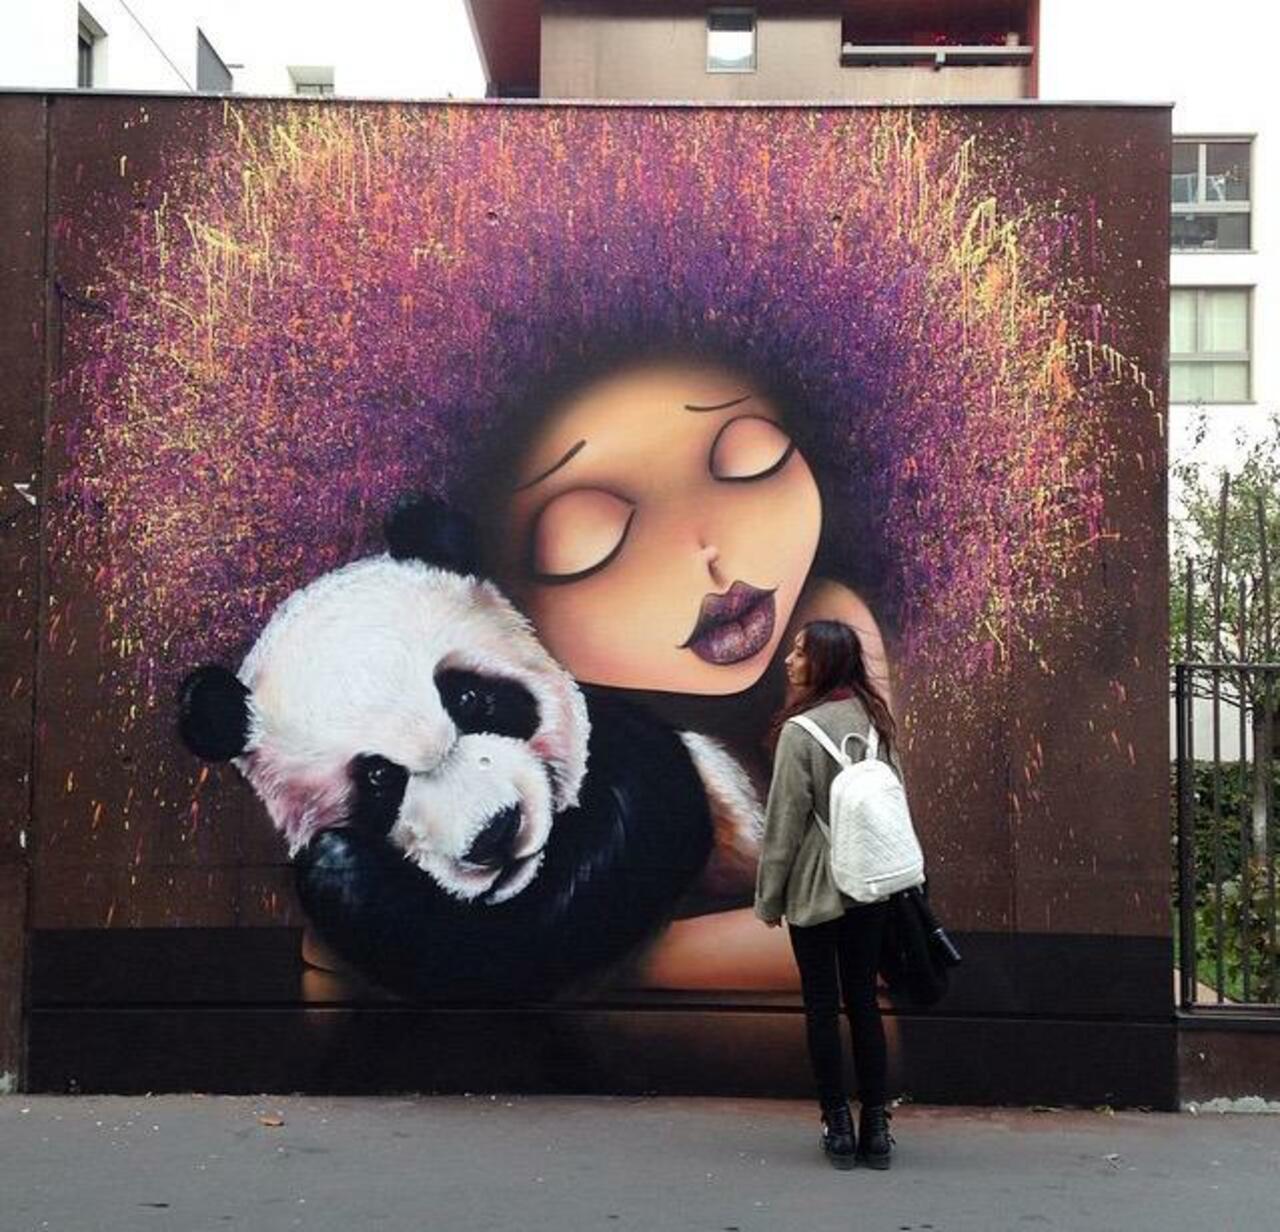 Street Art by VinieGraffiti in Paris 

#art #graffiti #mural #streetart http://t.co/MxtVN3Cudl